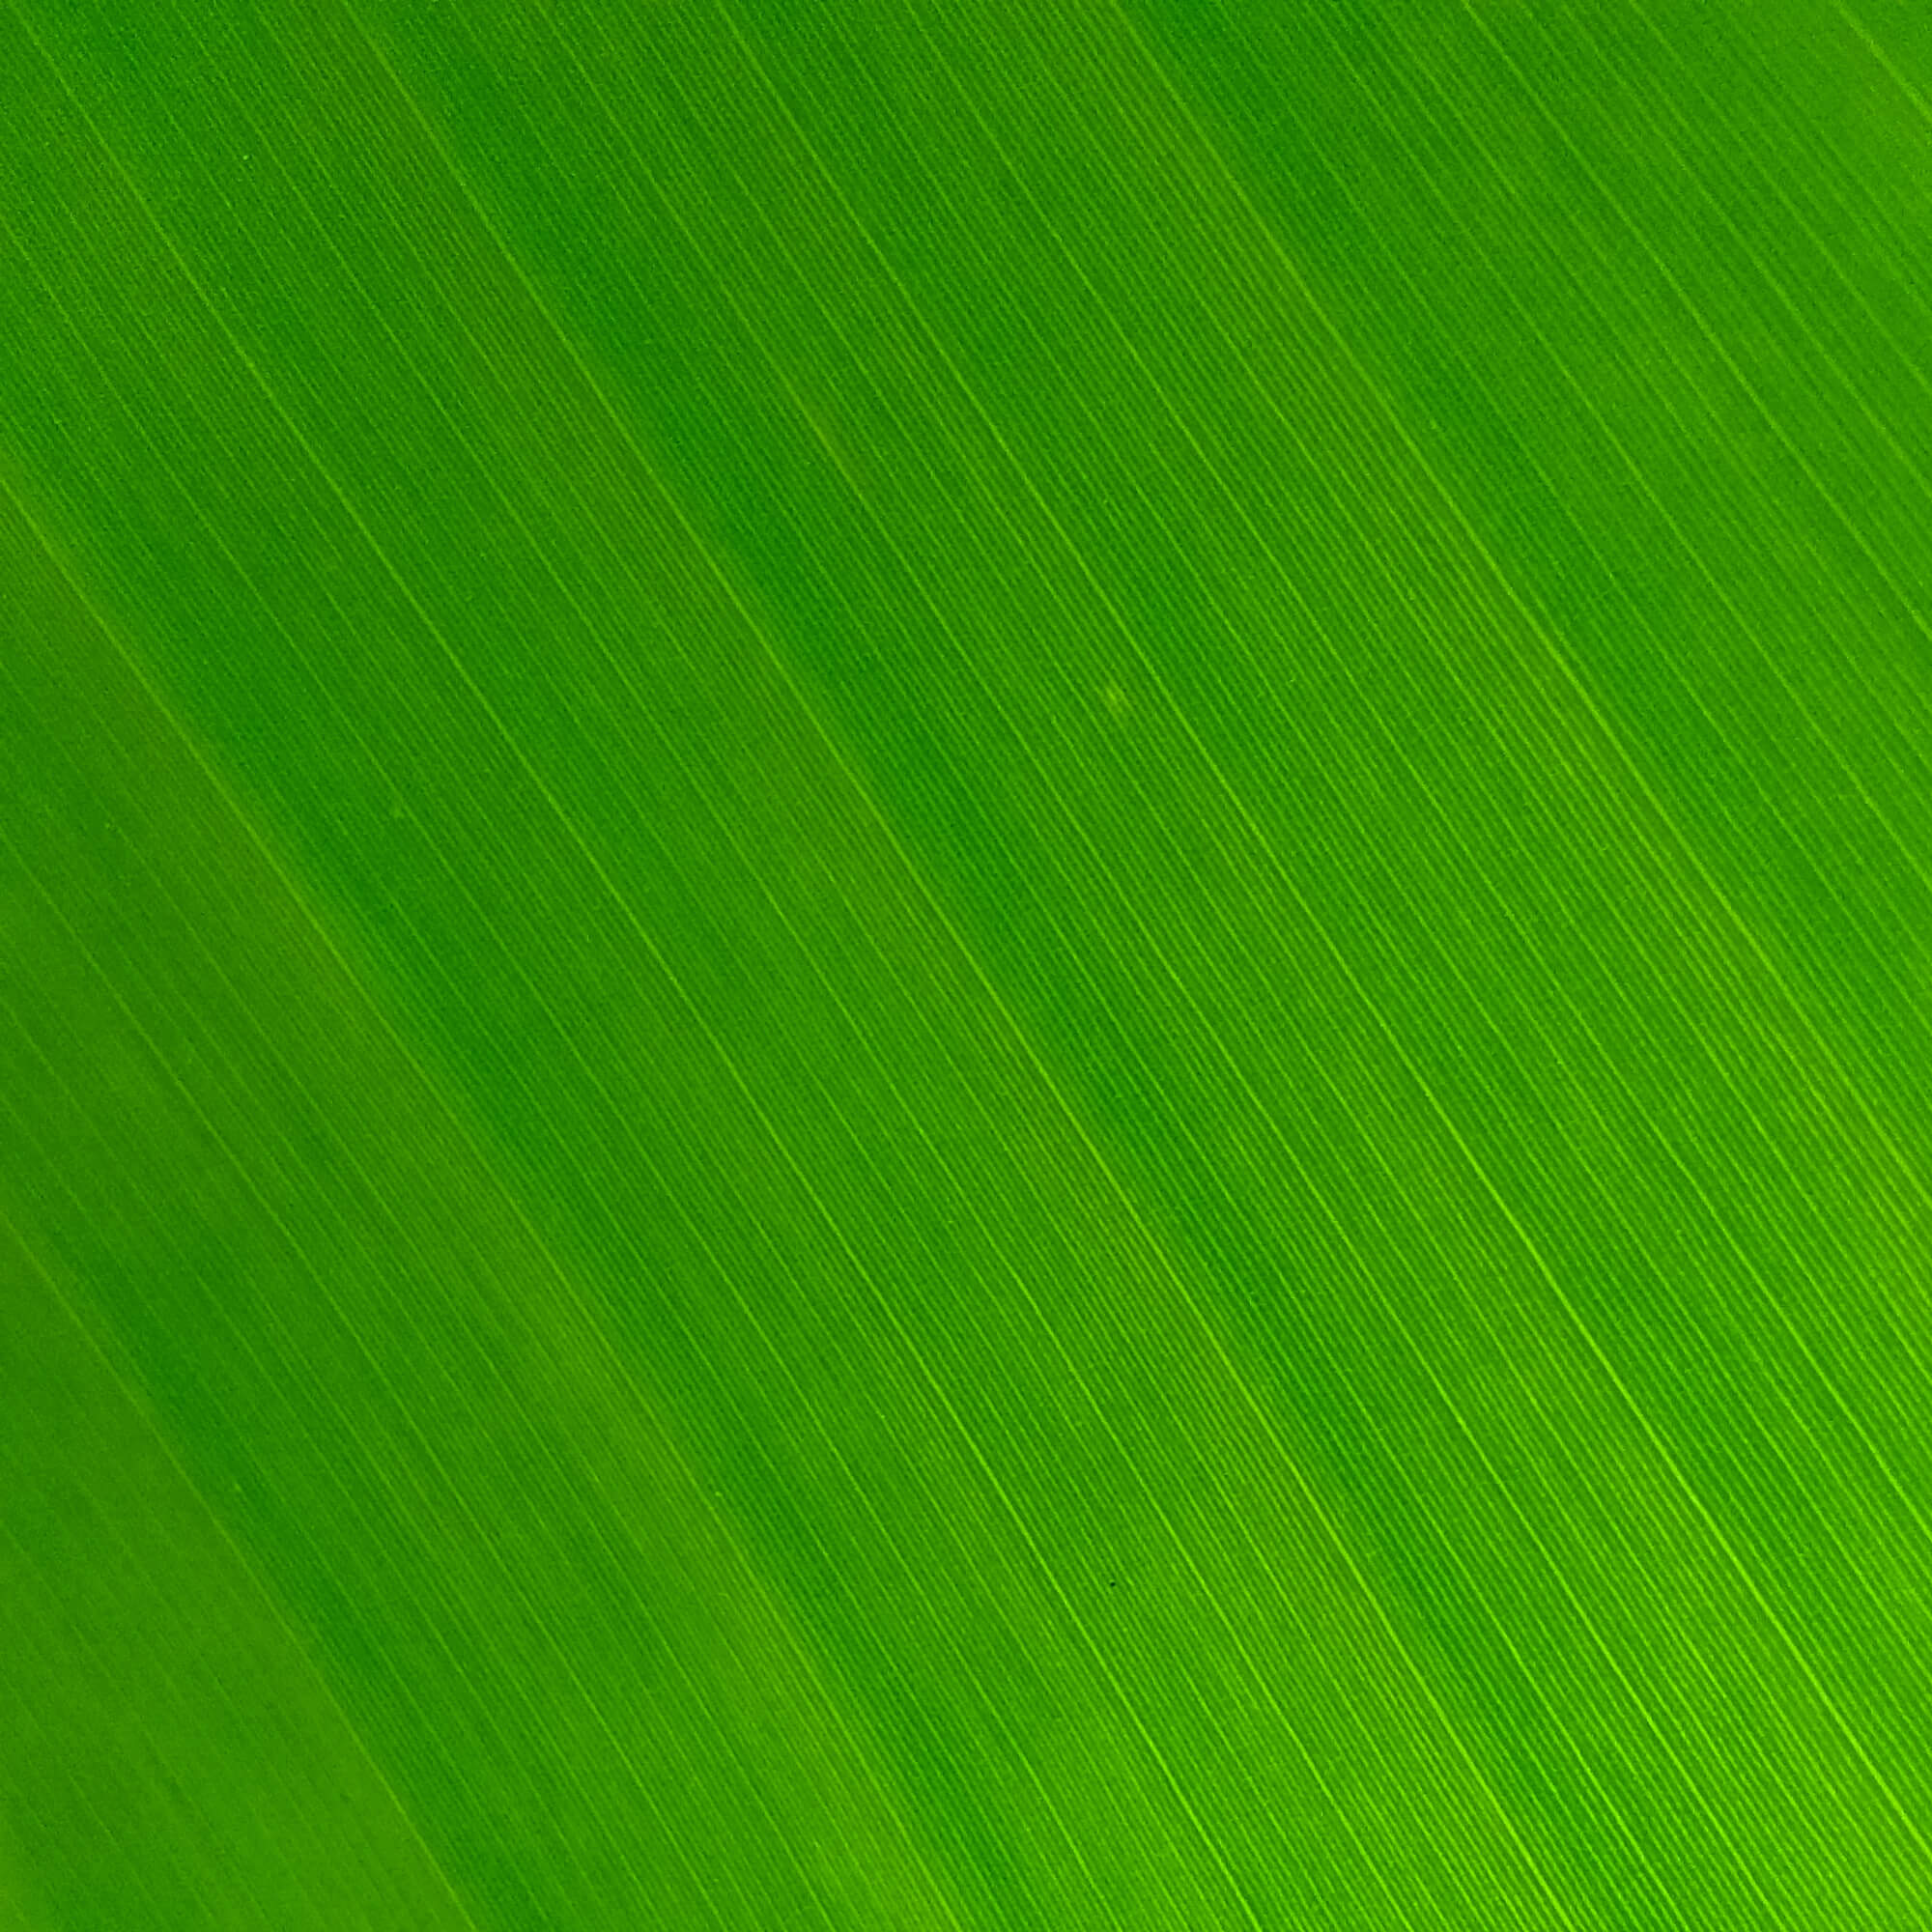 Green Background 06 - [1920x1080]